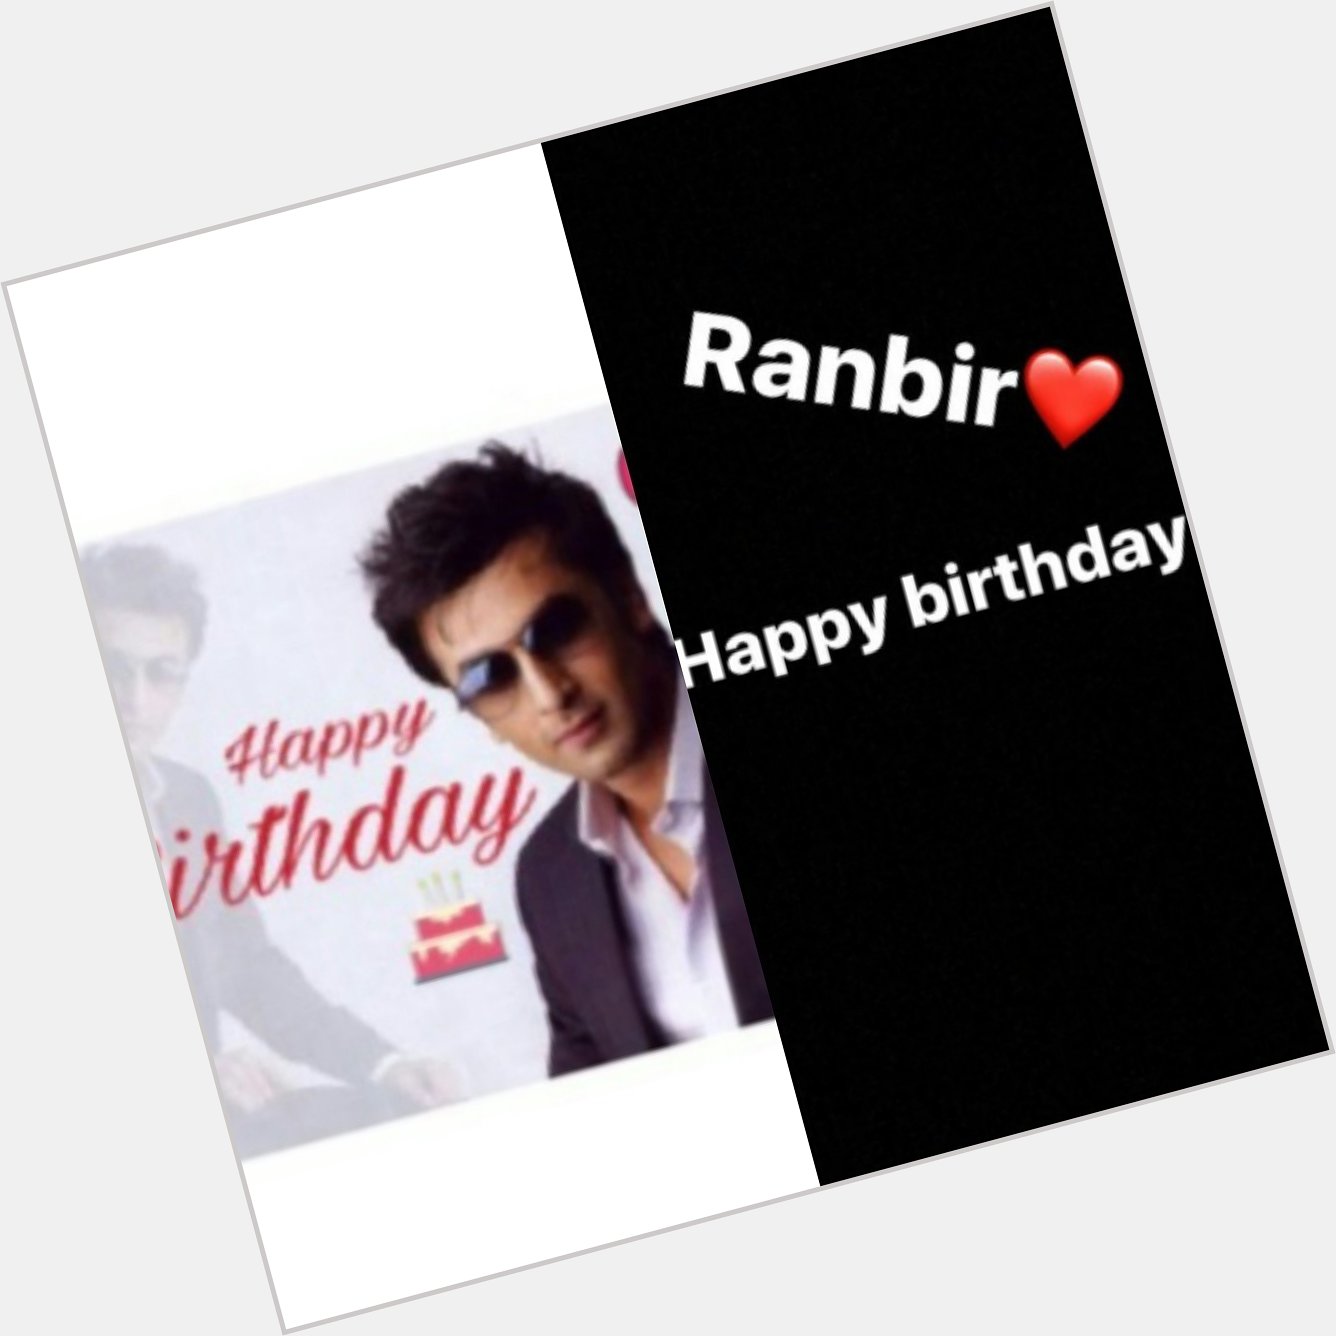 Wish you a very very happy birthday Ranbir kapoor..may god bless you    